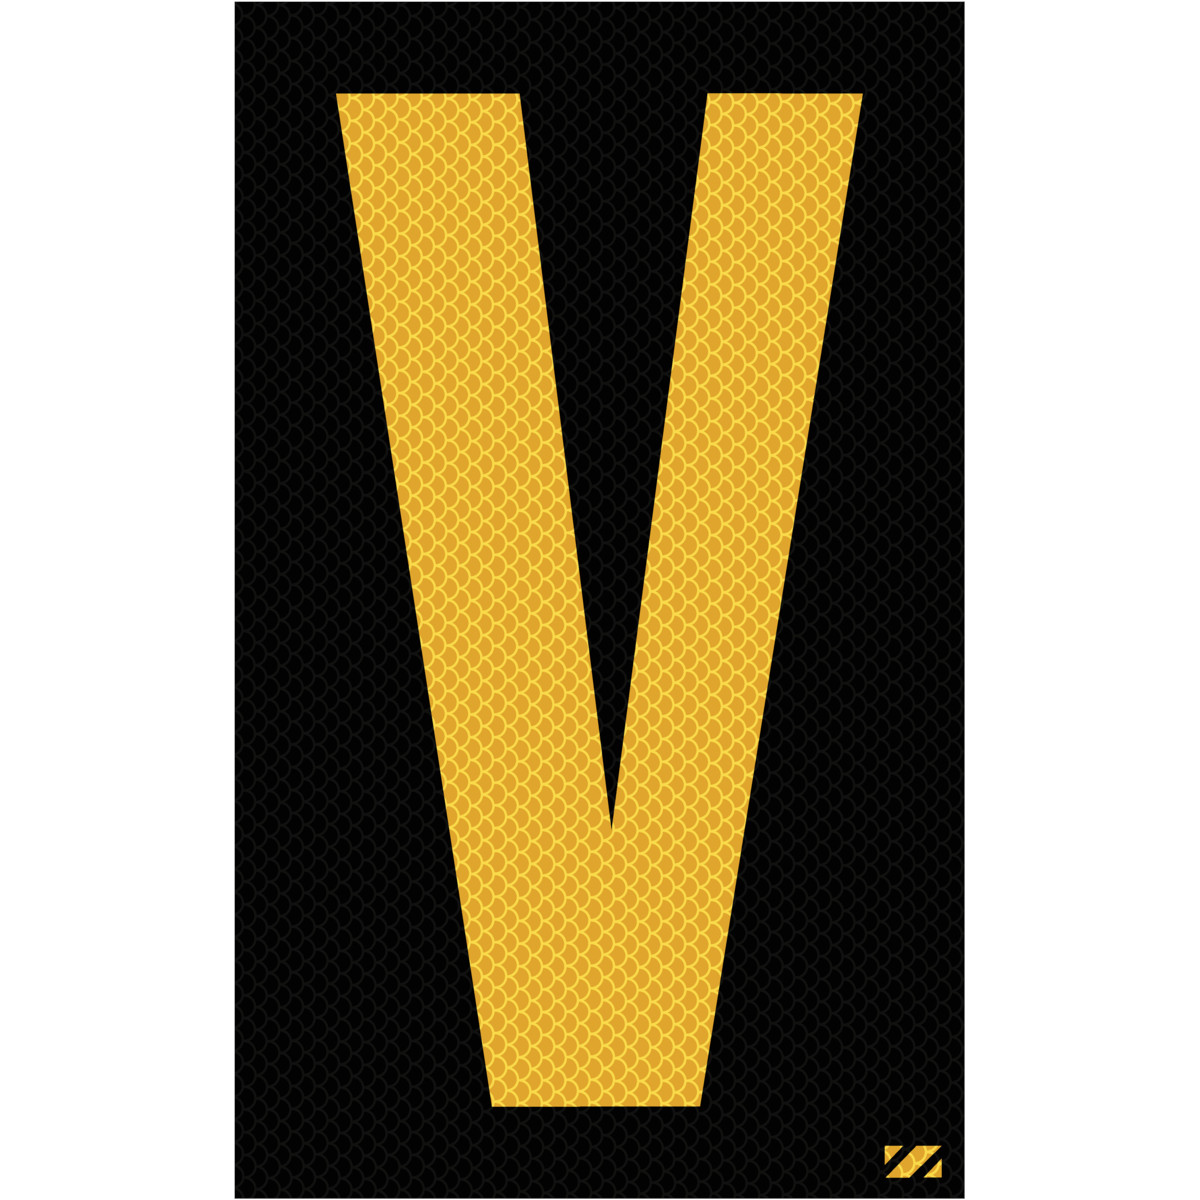 2.5" Yellow on Black High Intensity Reflective "V"